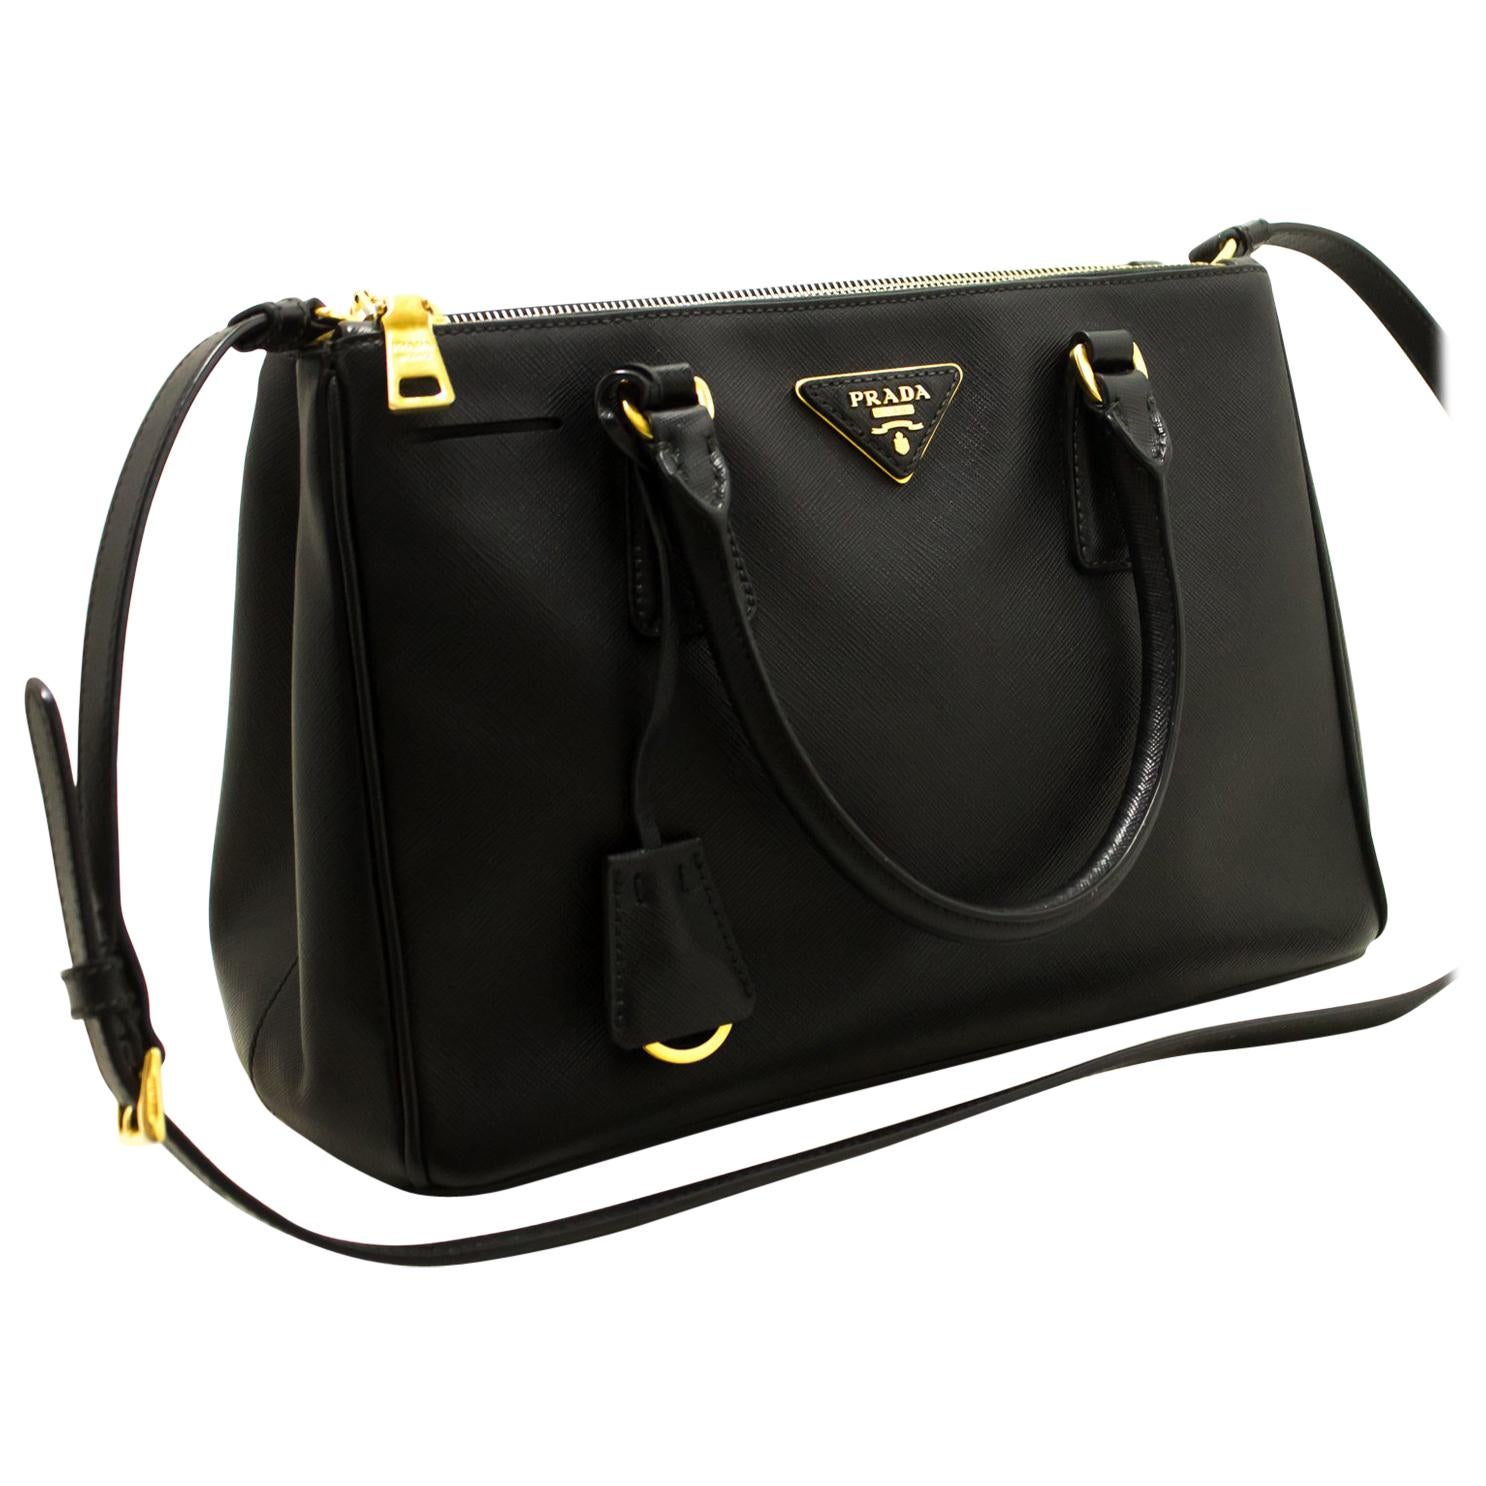 Prada Saffiano Lux Black Leather Gold 2 Way Handbag Shoulder Bag 